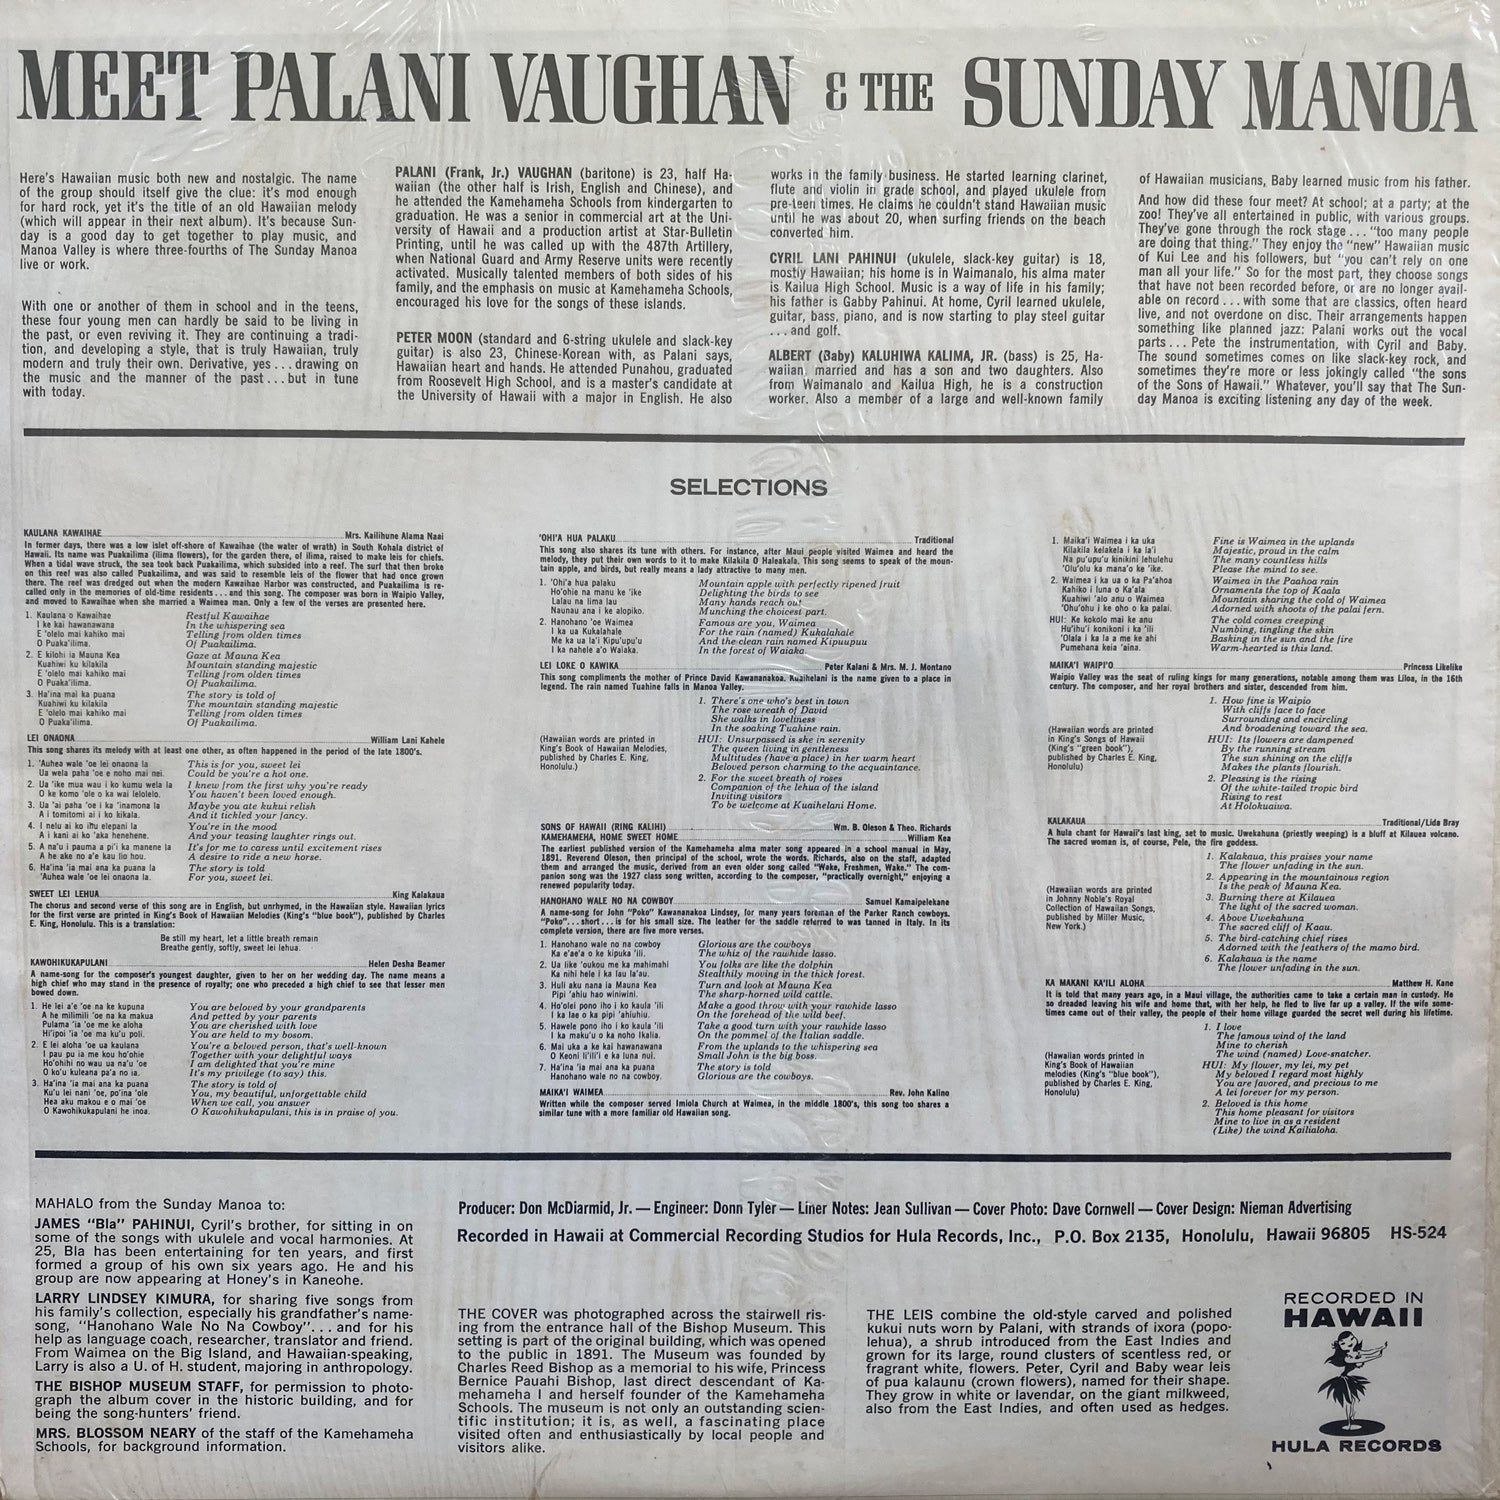 Palani Vaughan and the Sunday Manoa [HS 524]